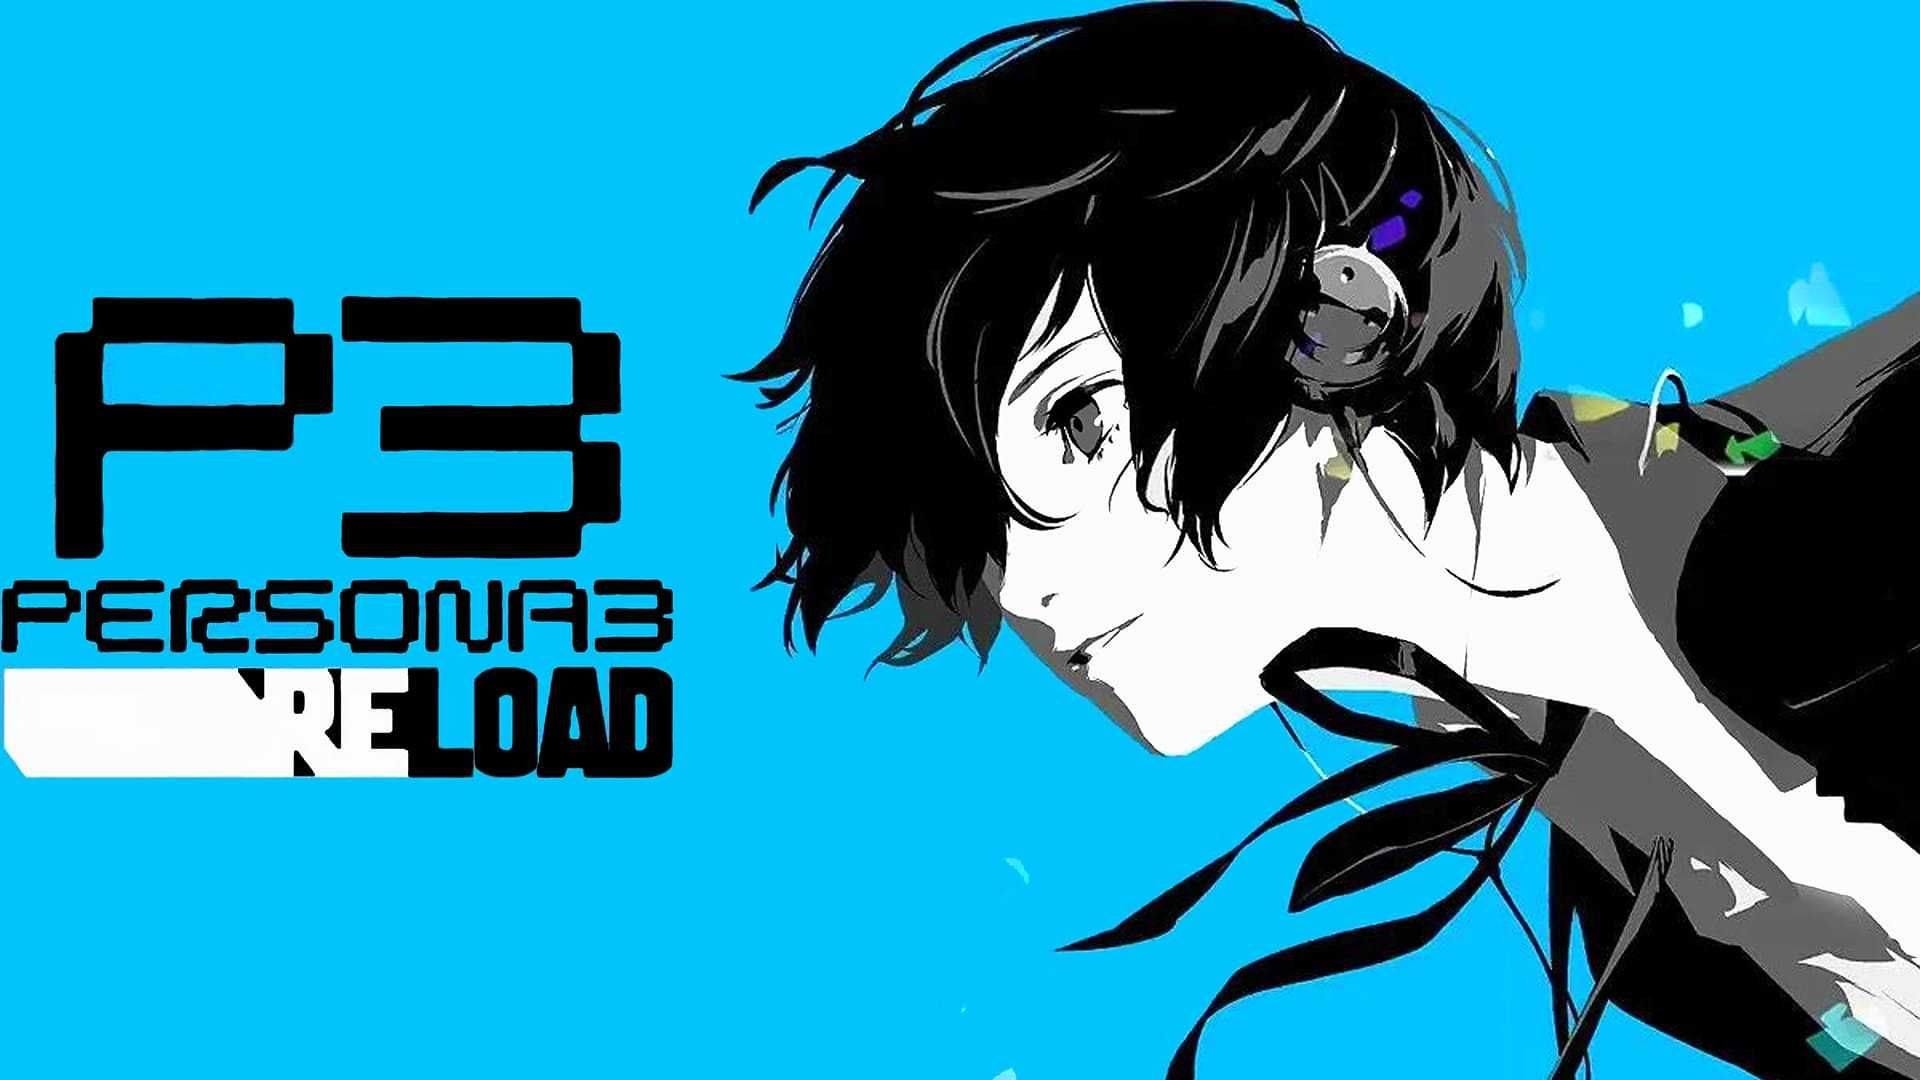 Persona 3 Reload logo